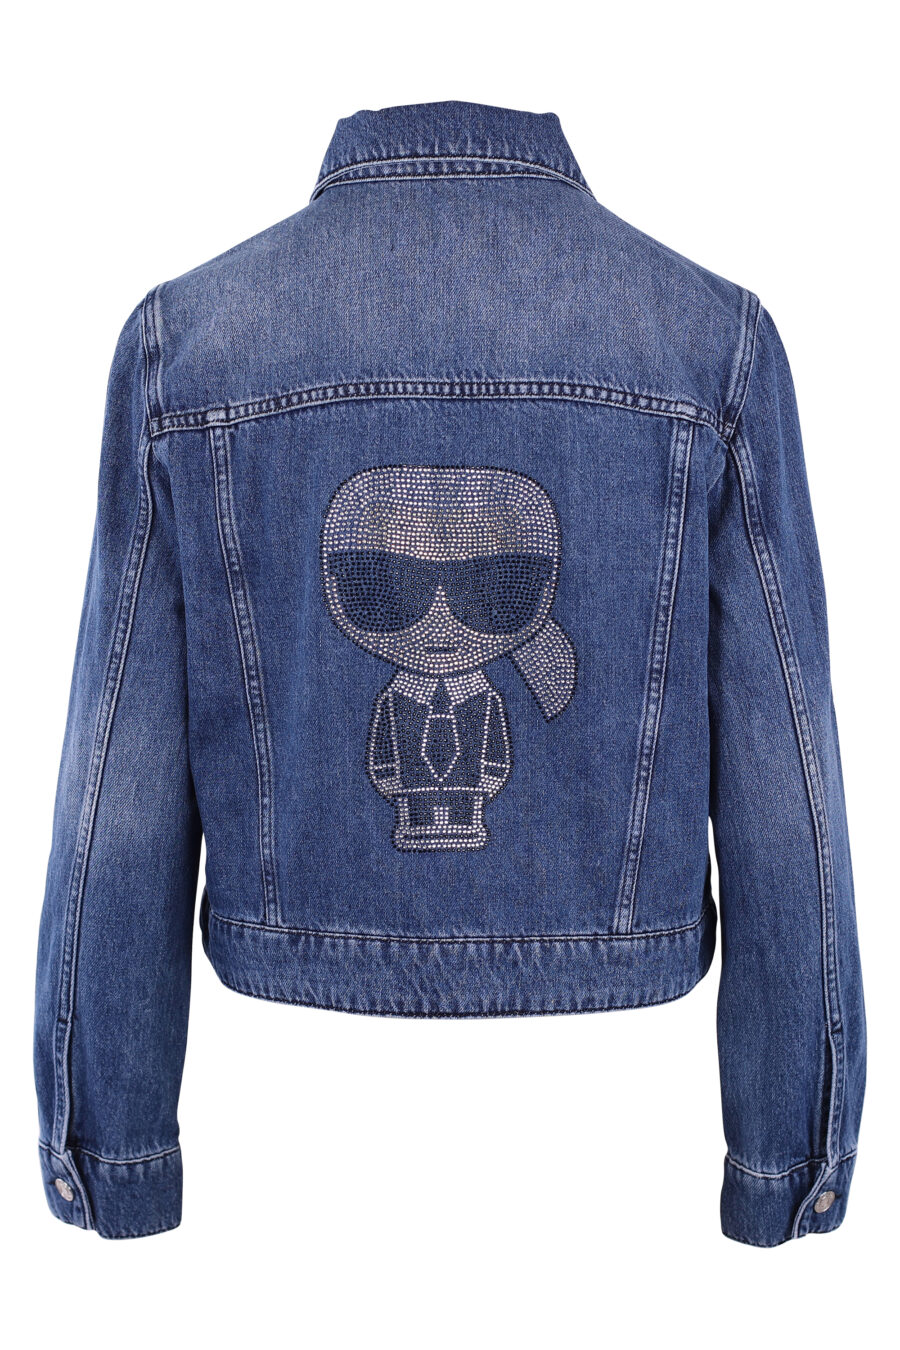 Blue denim jacket with kar logo with crystals - IMG 6174